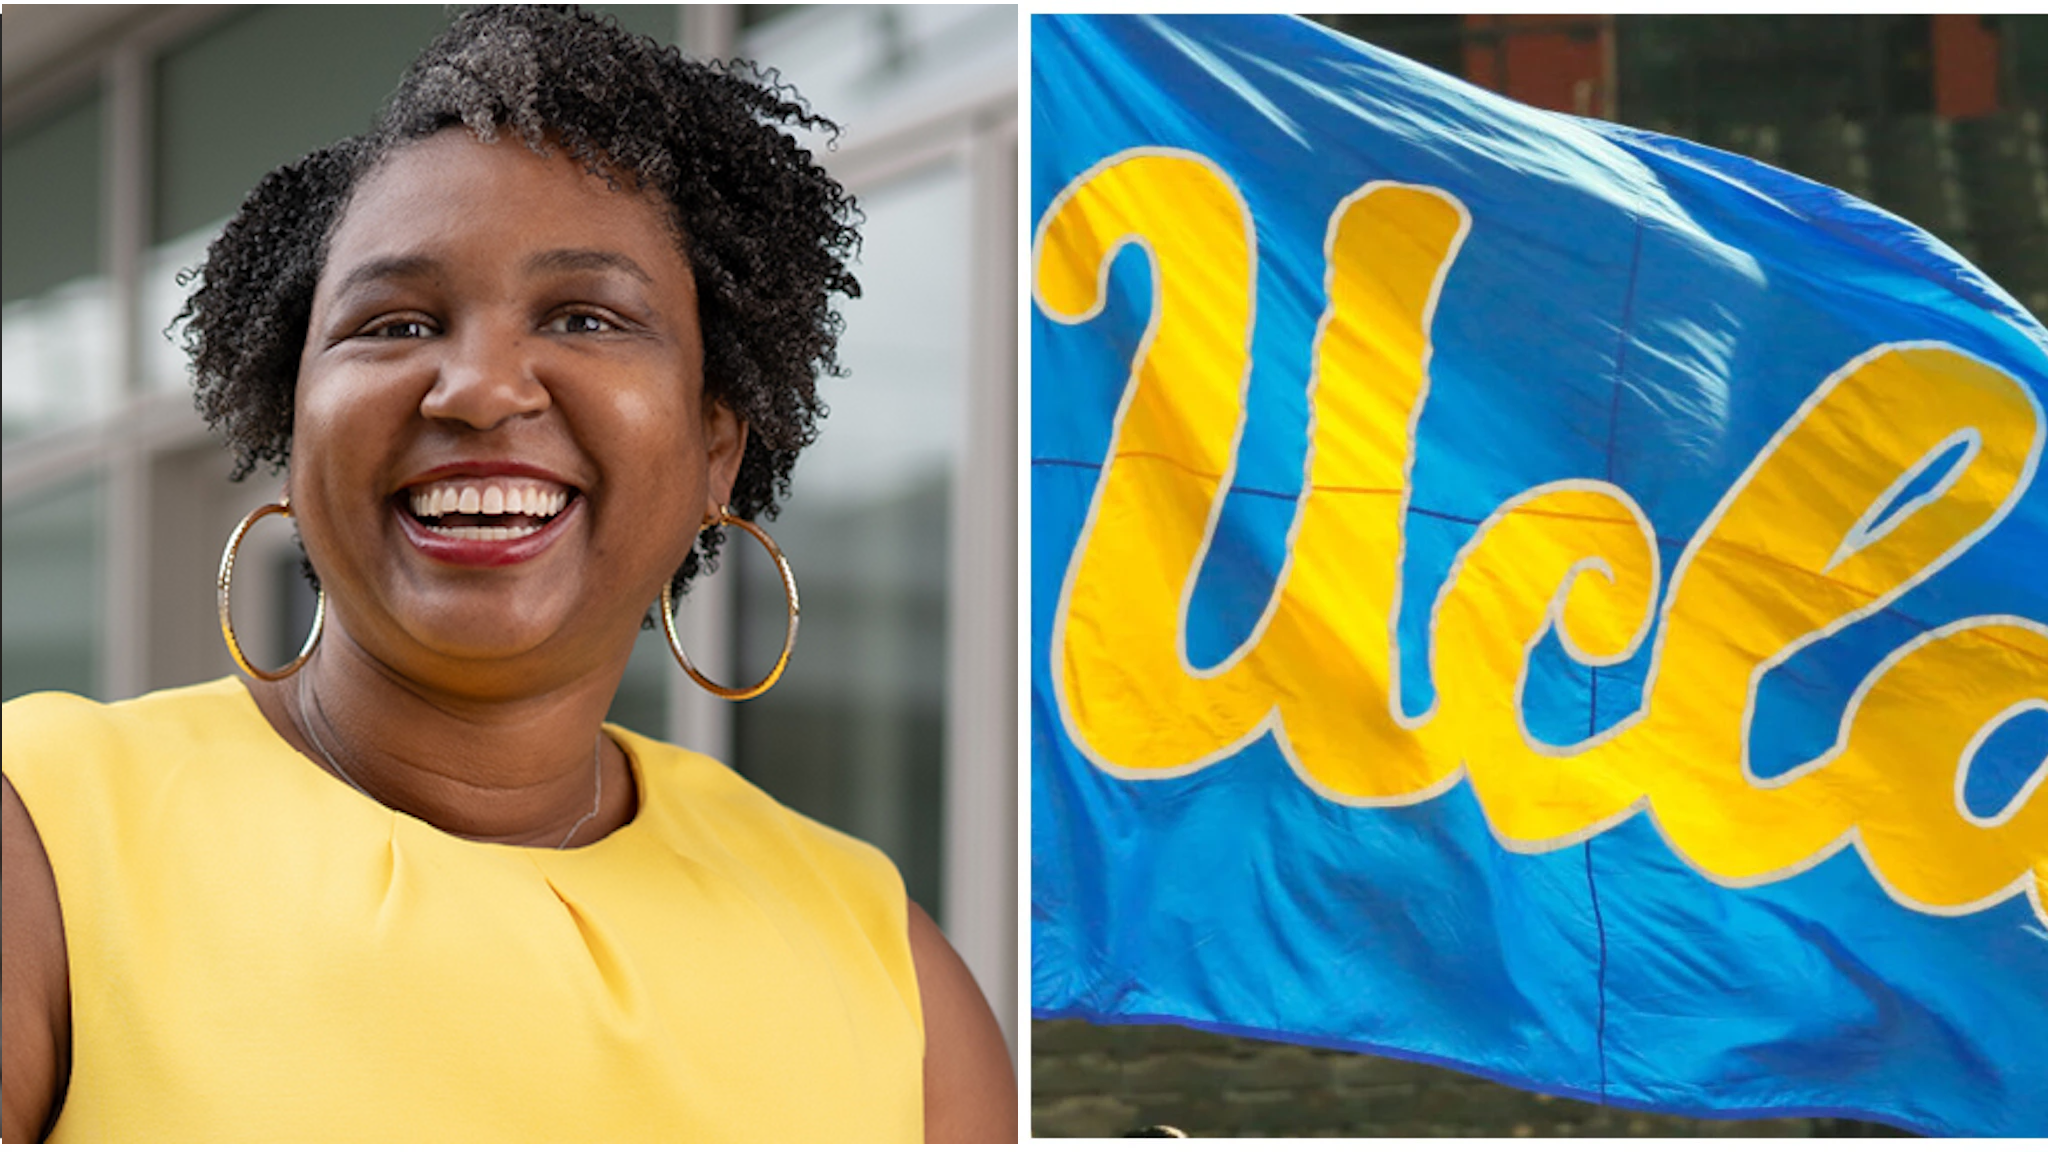 Unprecedented’: UCLA Silent on Academic Scandal Despite Plagiarism Outcry